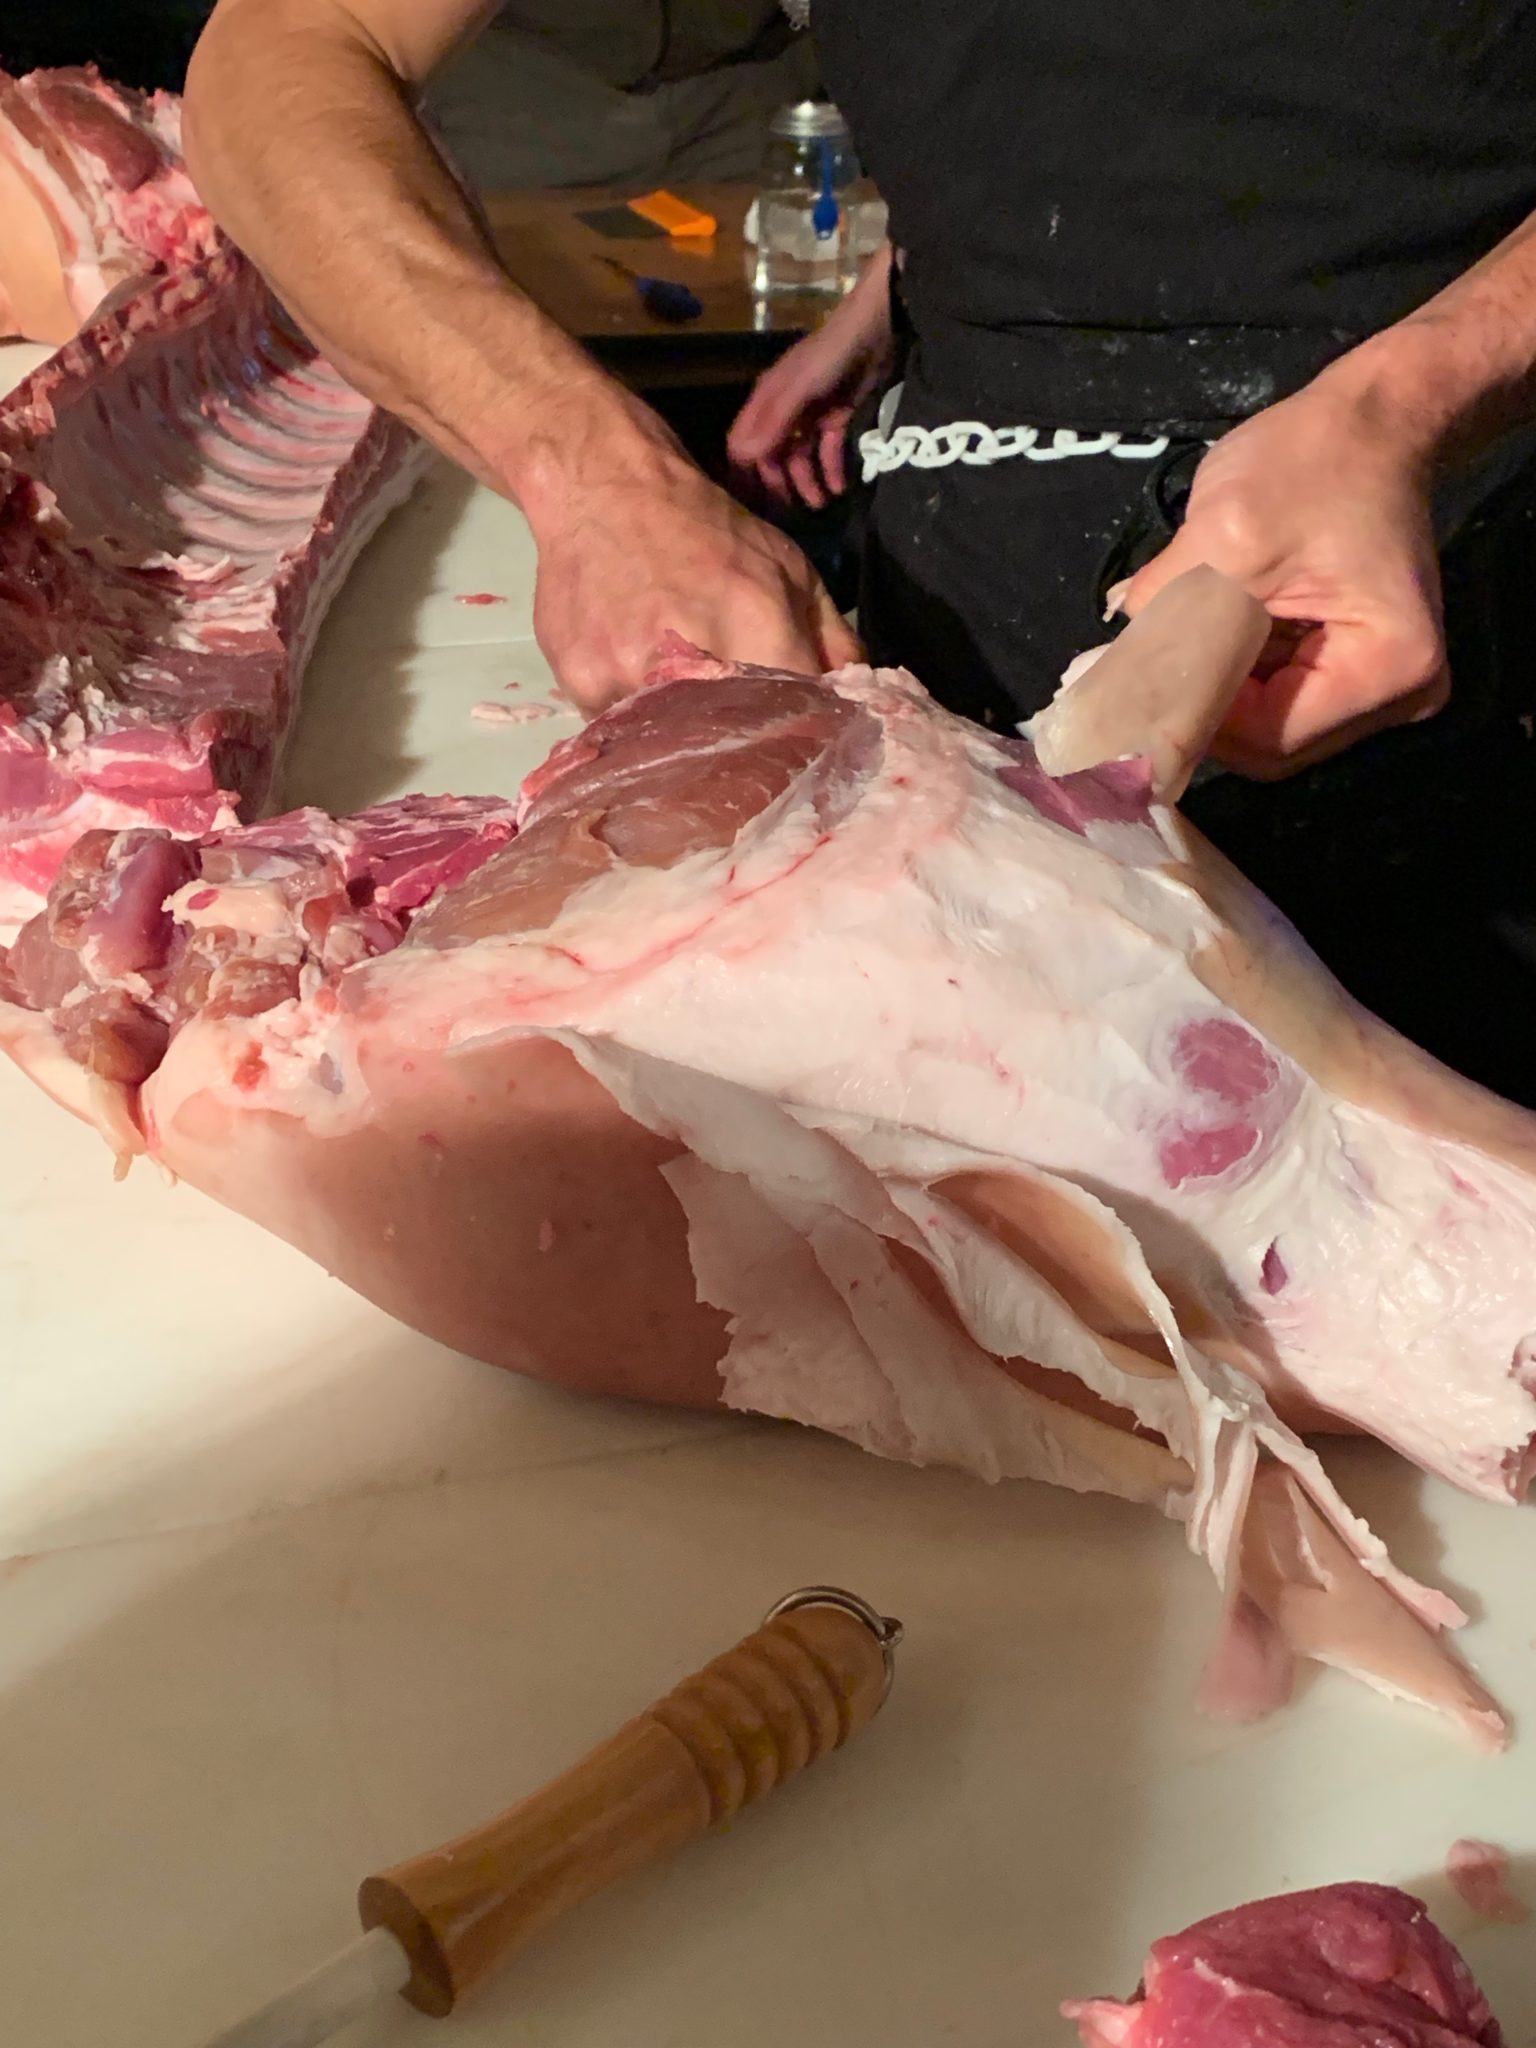 Hog leg being butchered